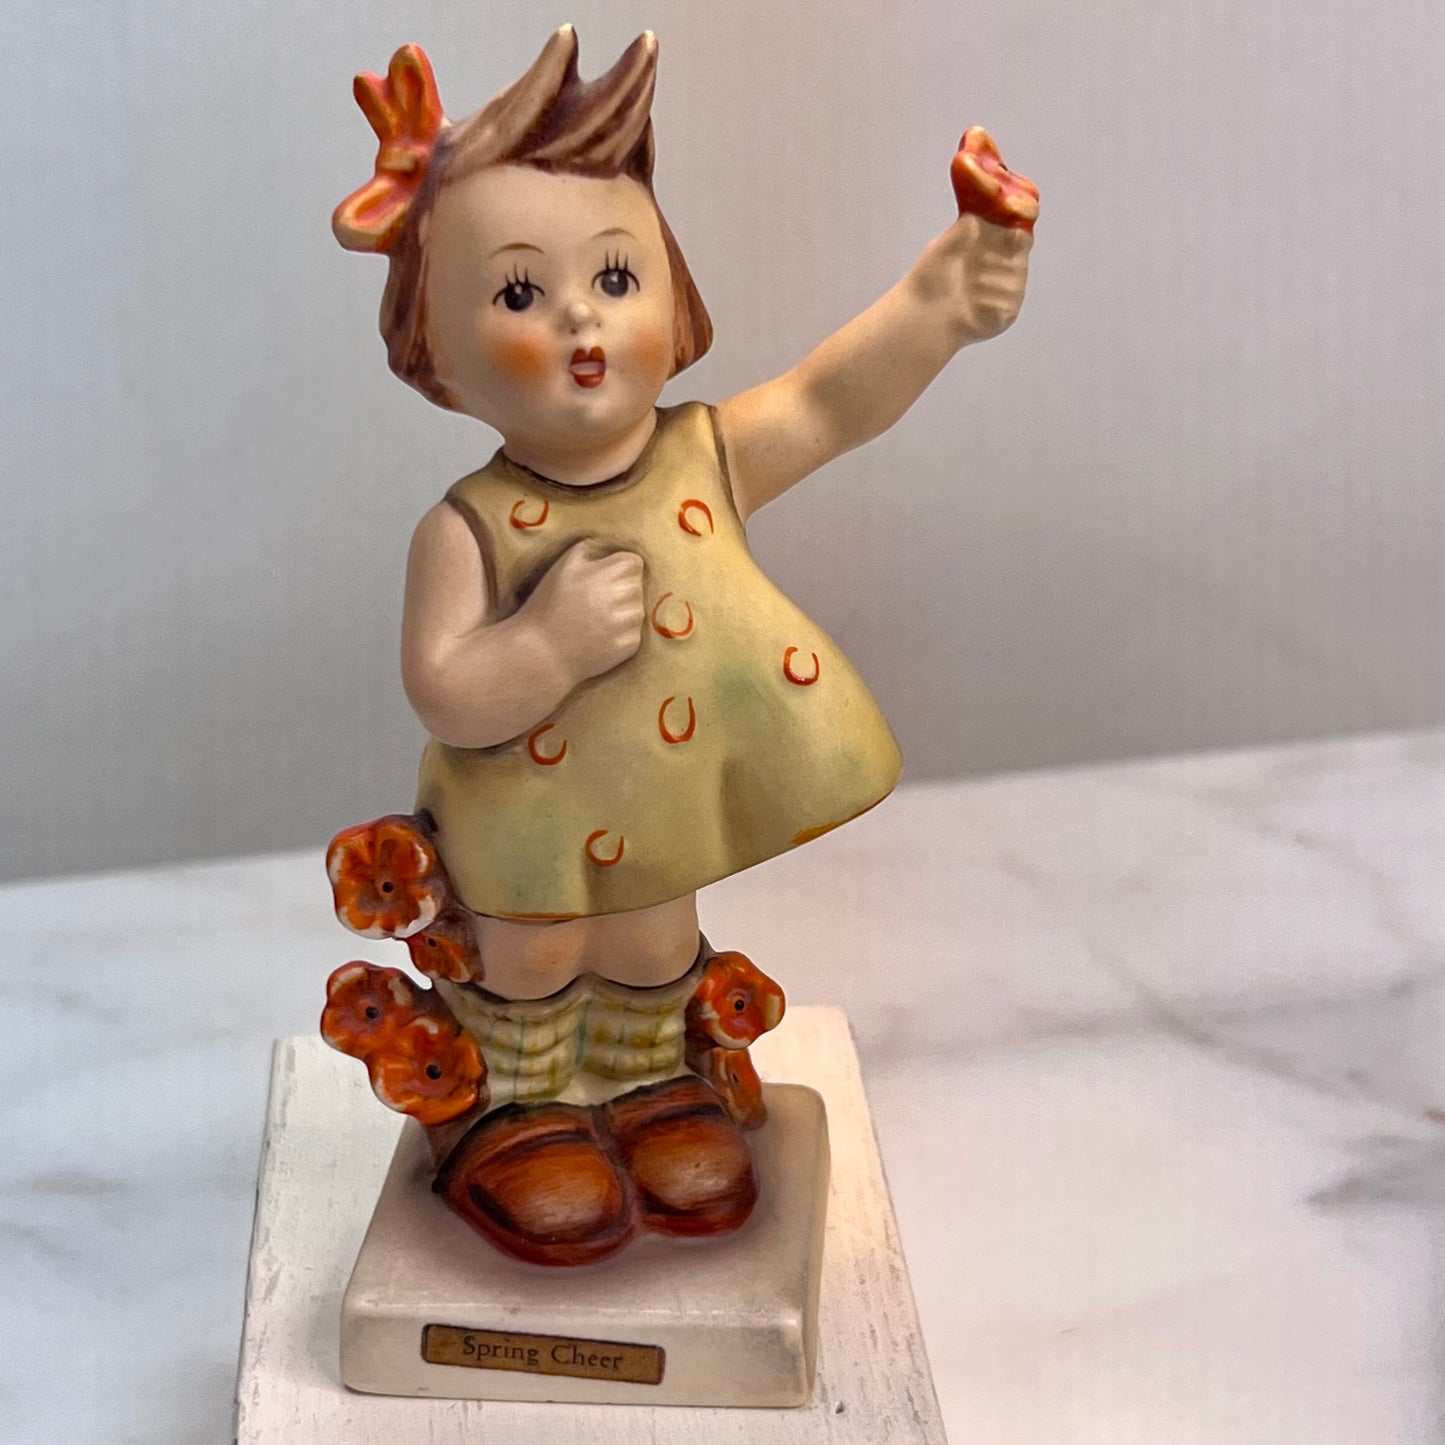 Vintage Hummel "Spring Cheer" Figurine HUM 72 TM 3